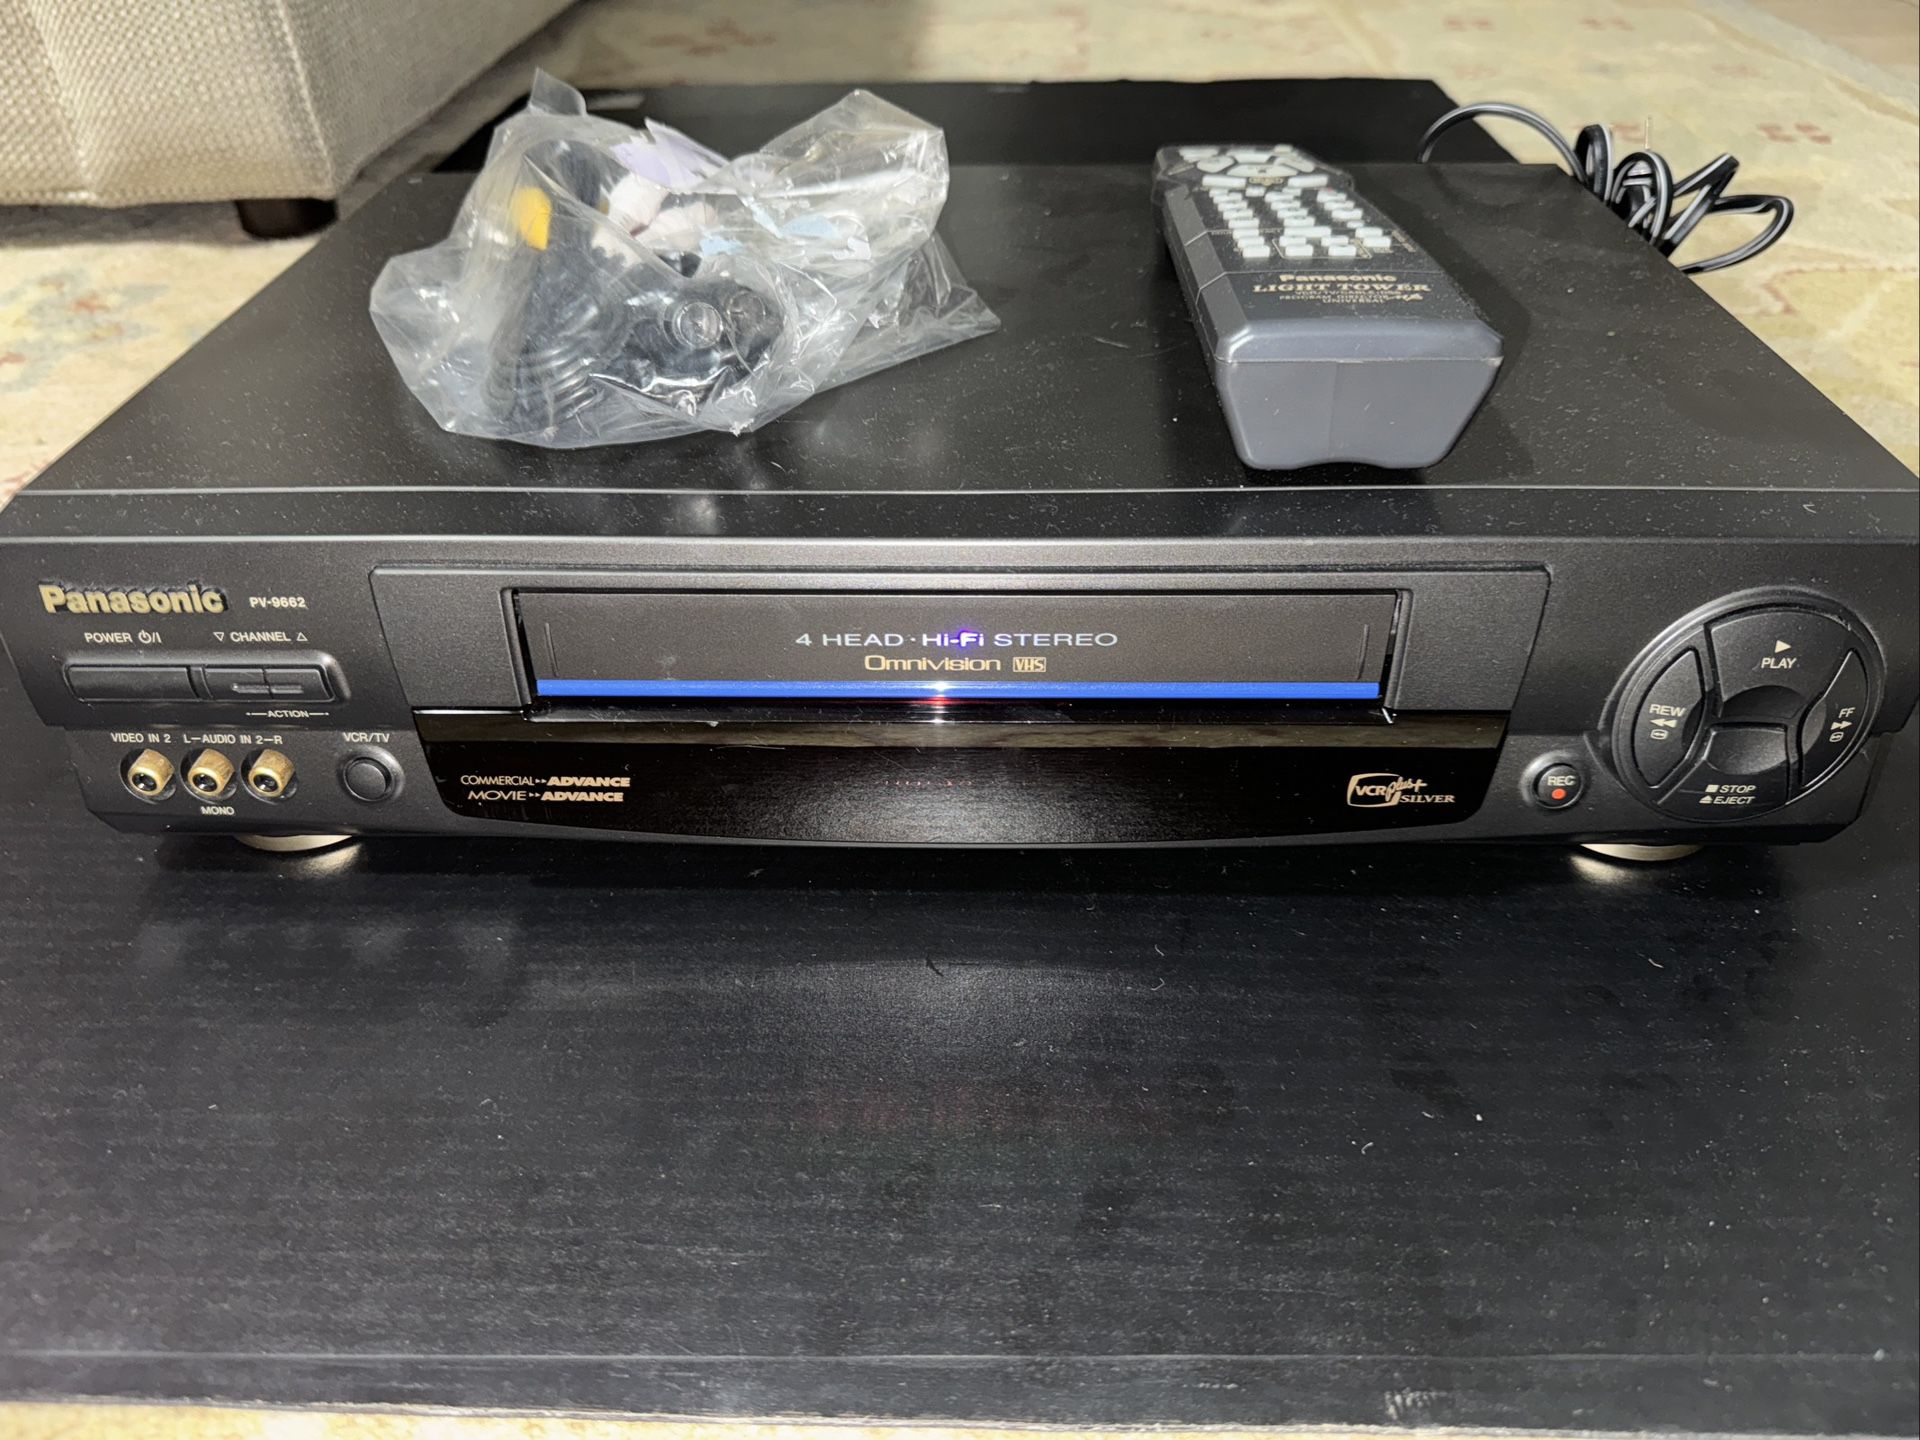 VCR Panasonic PV-9662 Omnivision PlusVHS Player 4 Head Hi-Fi Remote Work Tested